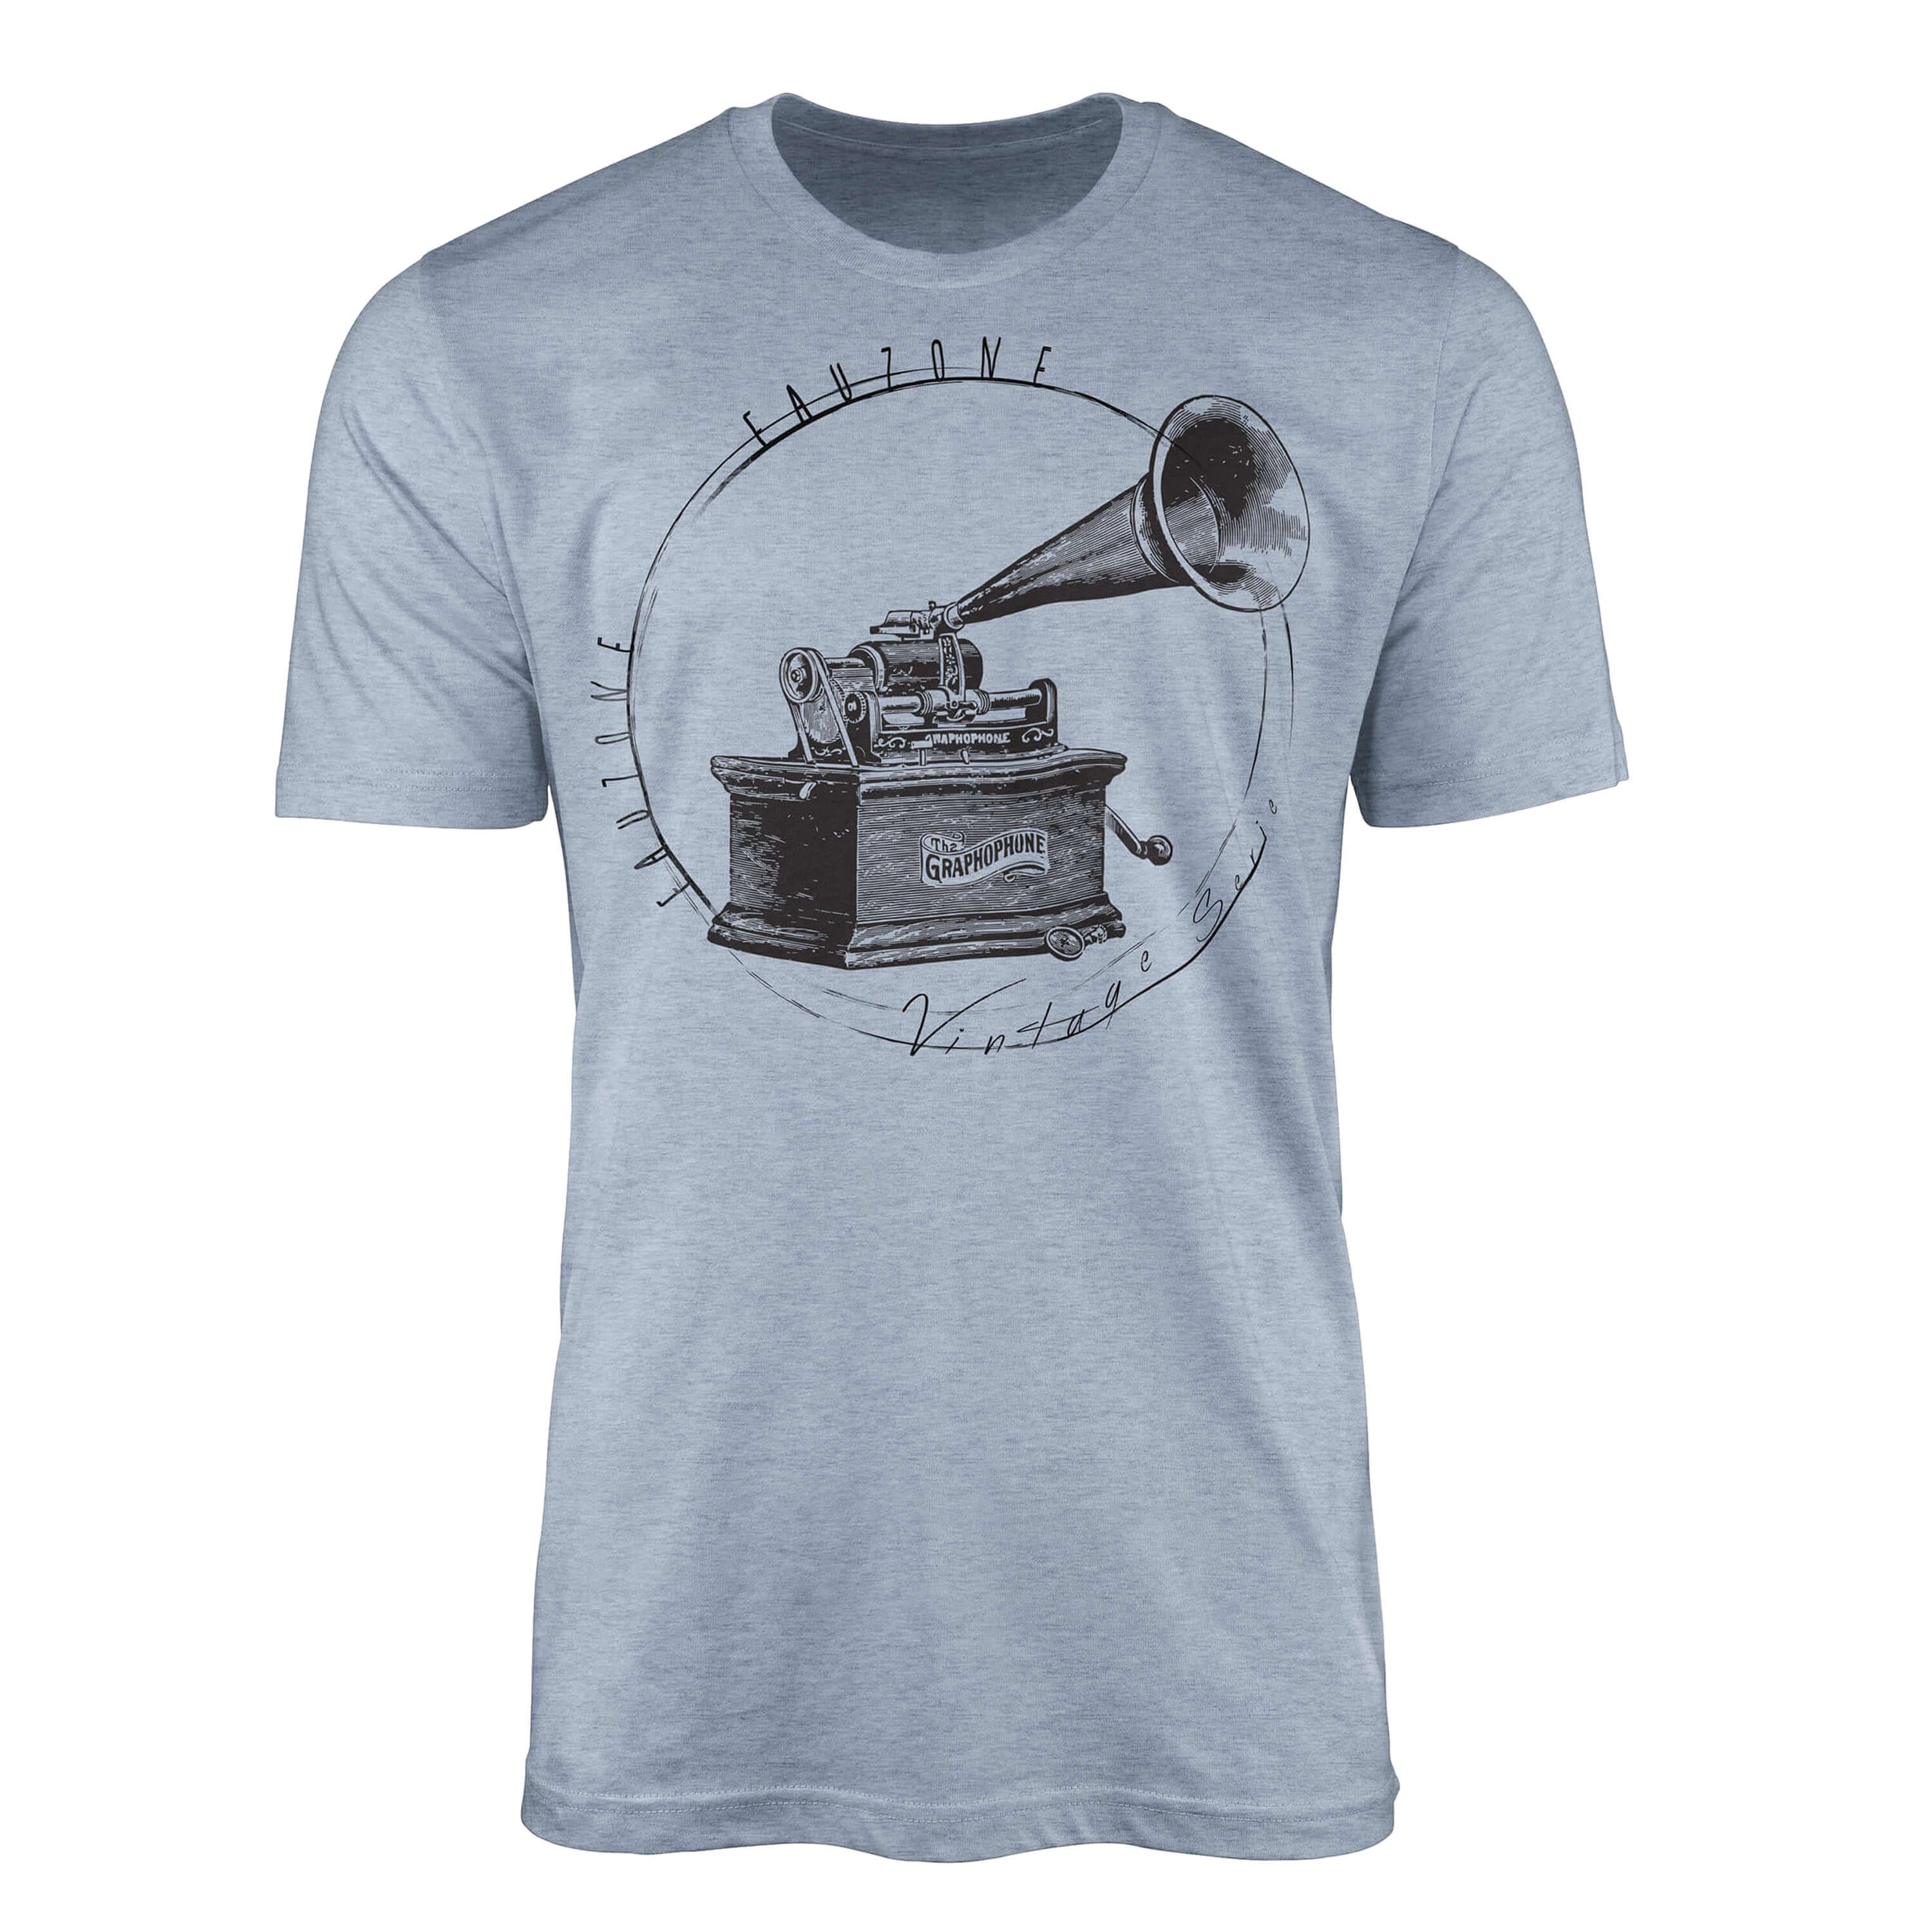 Sinus Art T-Shirt Vintage Herren T-Shirt Grammophon Stonewash Denim